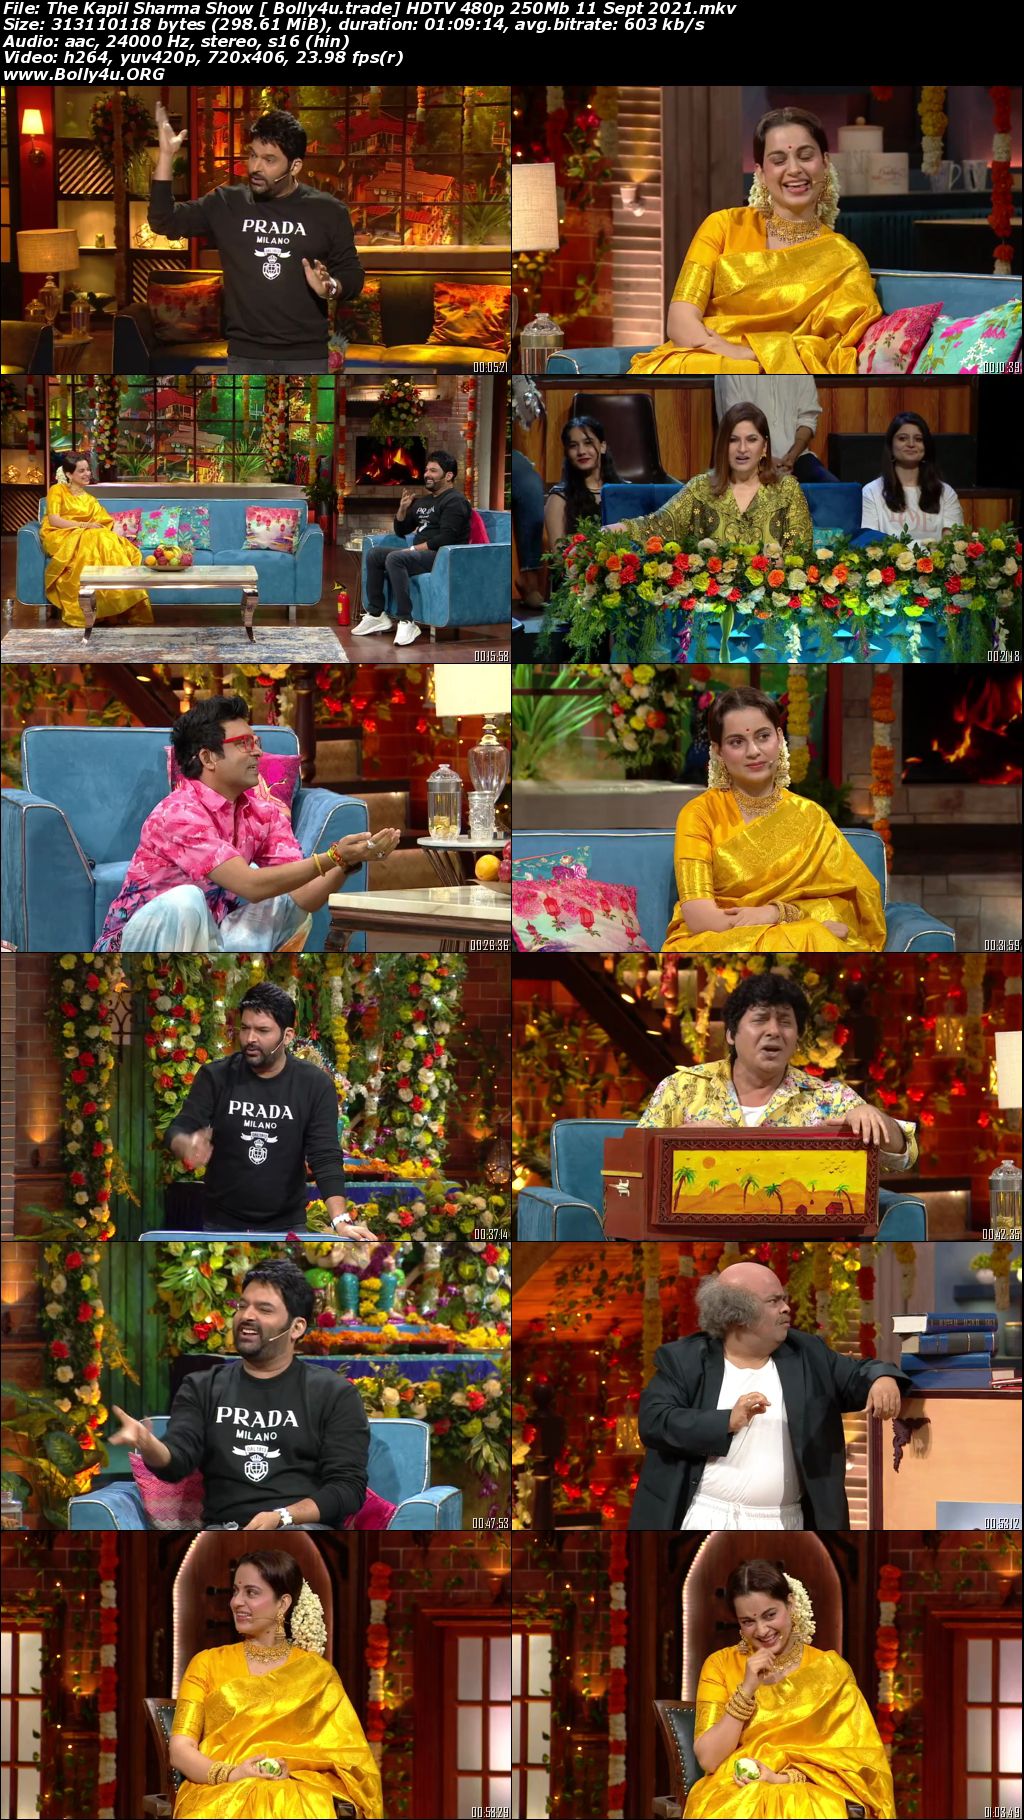 The Kapil Sharma Show HDTV 480p 250Mb 11 September 2021 Download